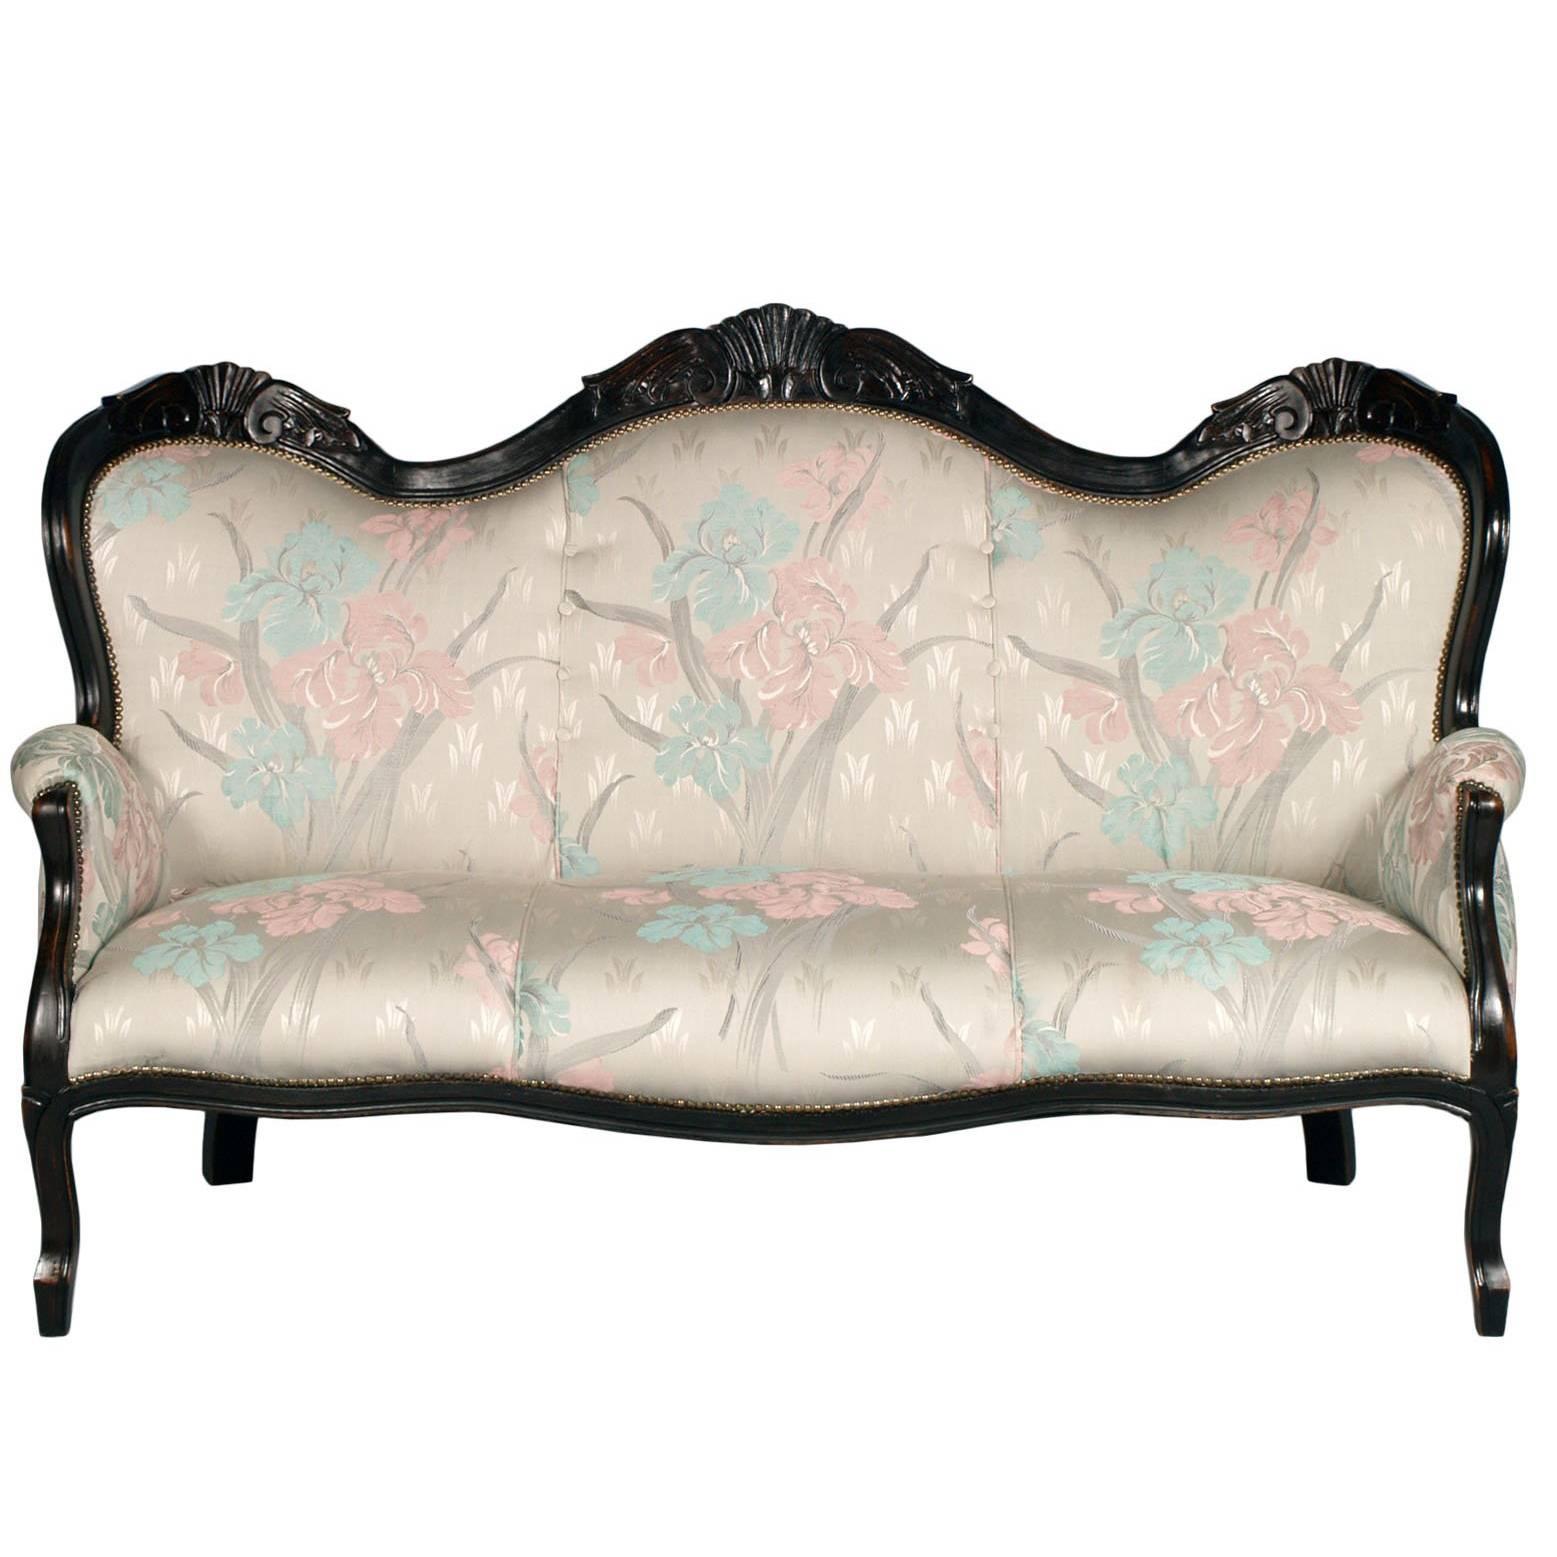 19th Century Italian Baroque Sofa, ebonized hand-carved walnut upholstery 2000s For Sale